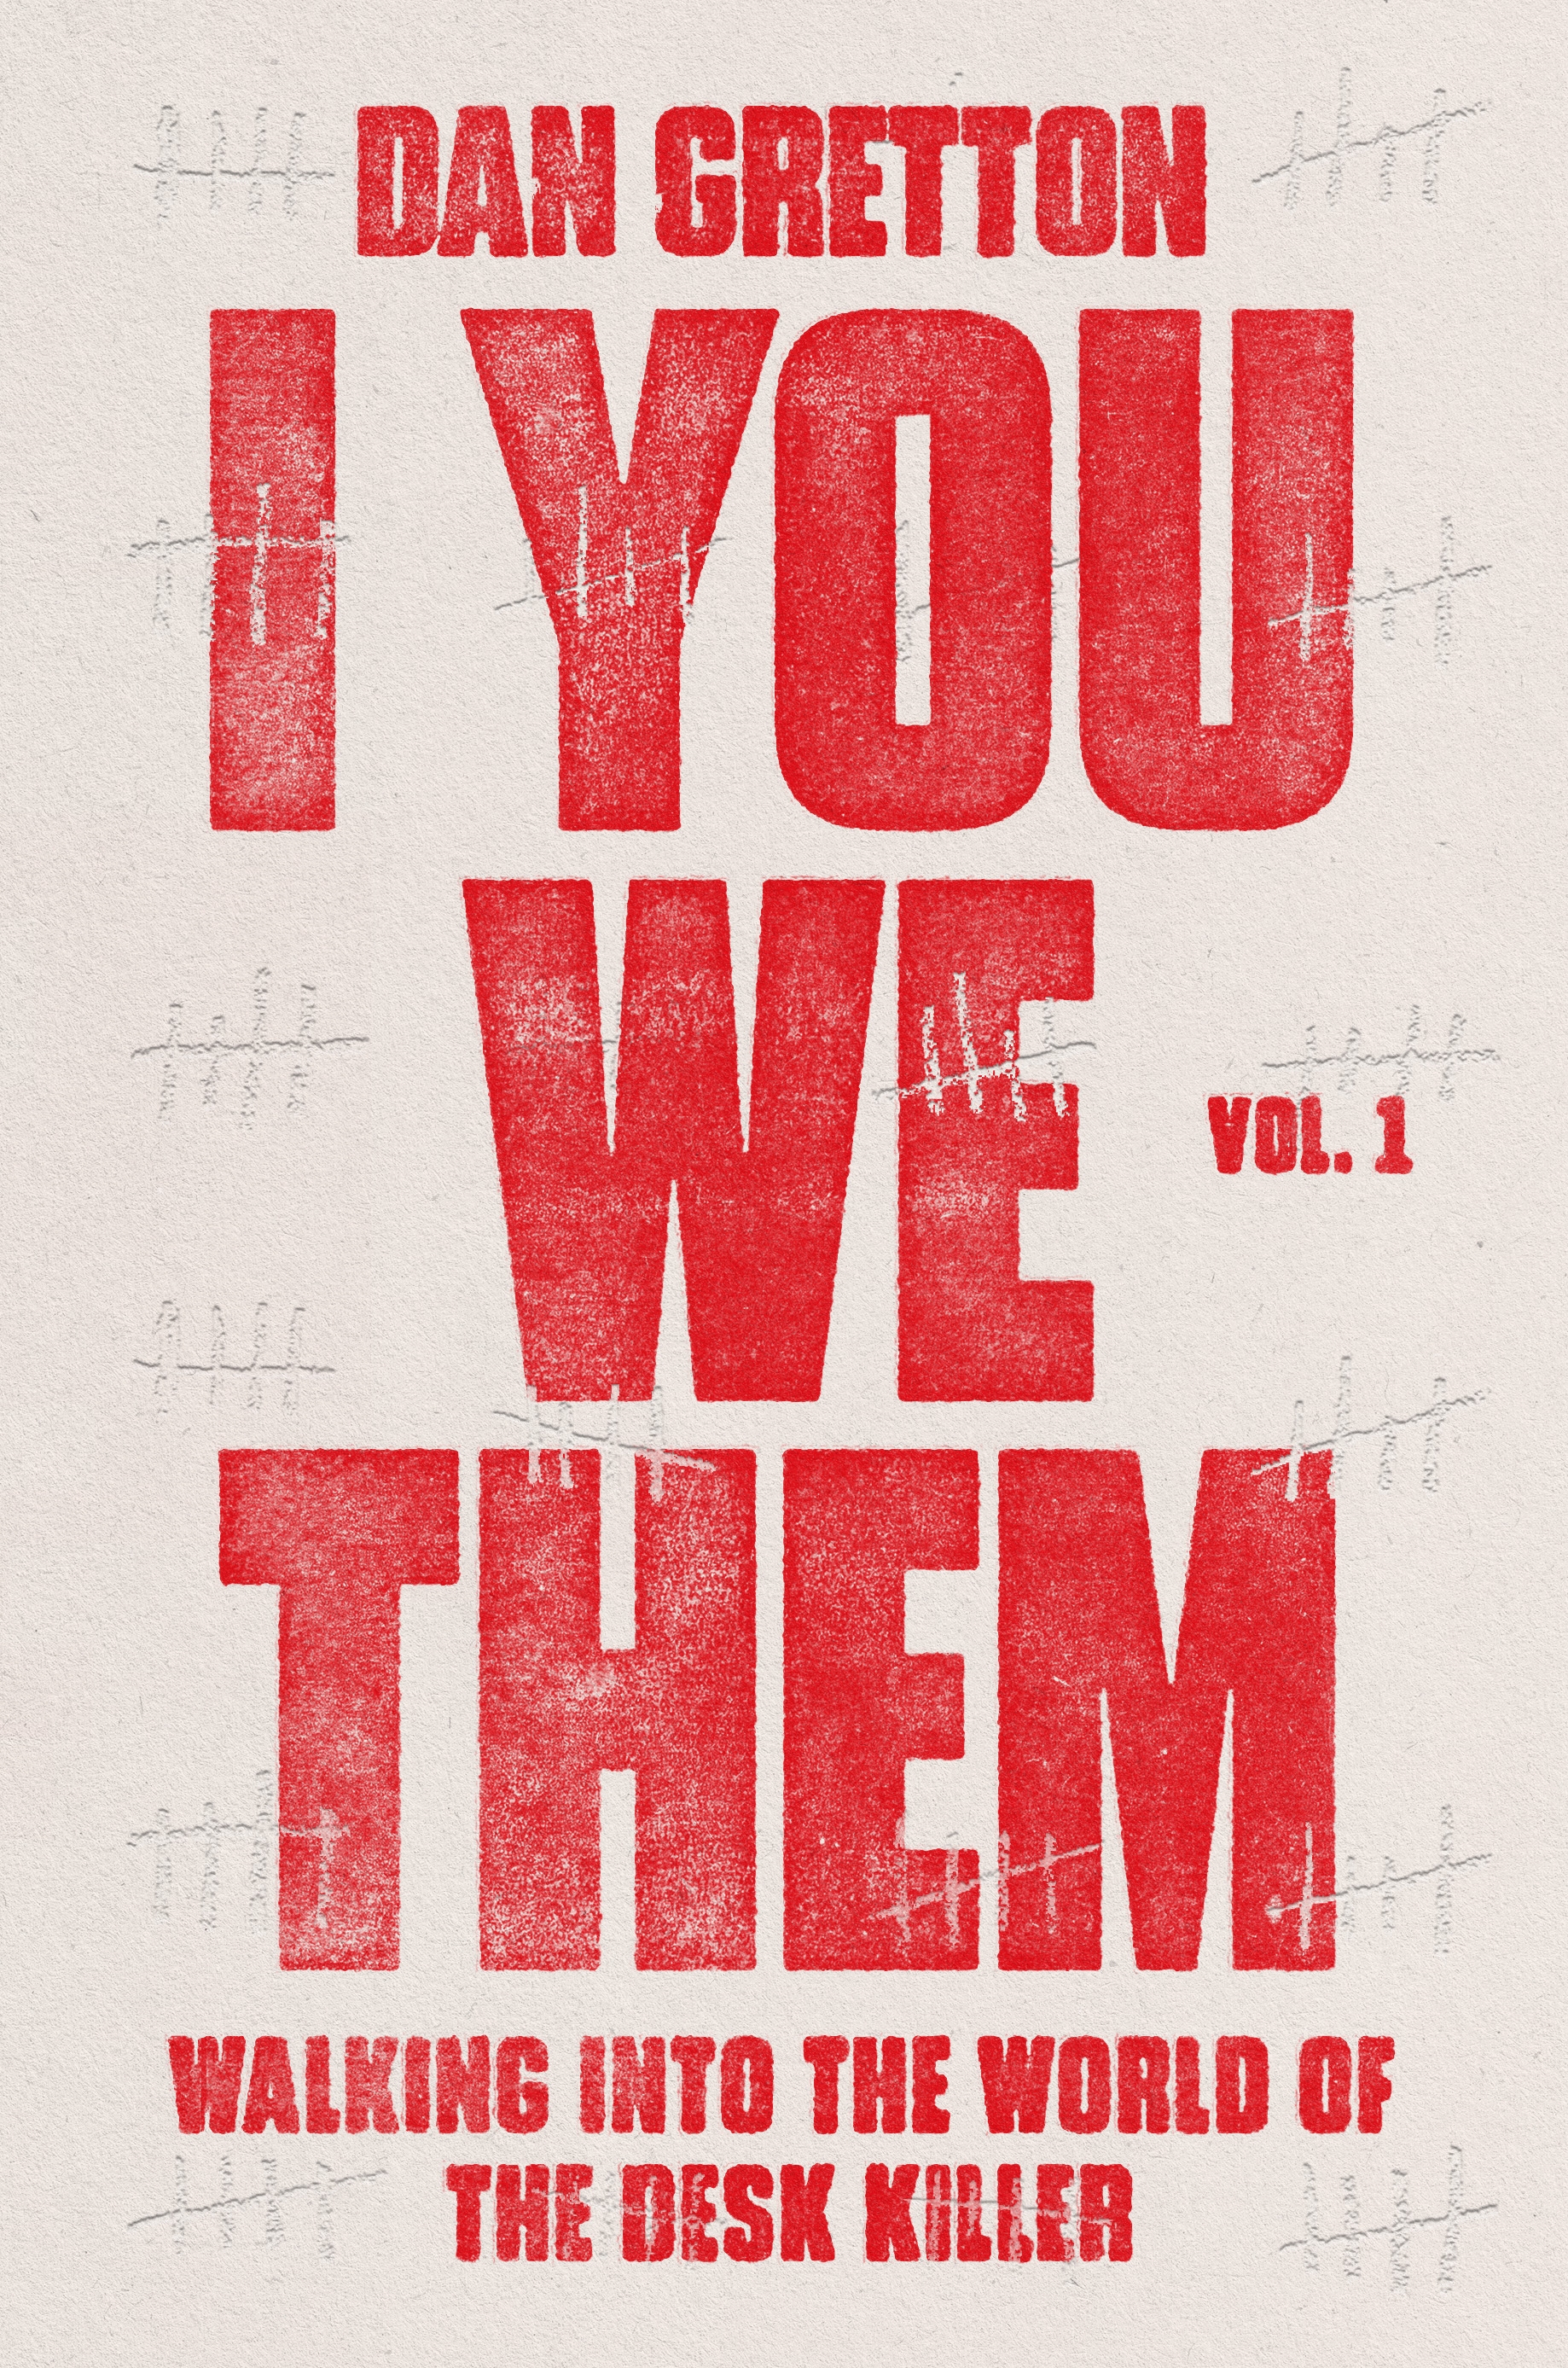 Book “I You We Them Vol. 1” by Dan Gretton — July 21, 2020